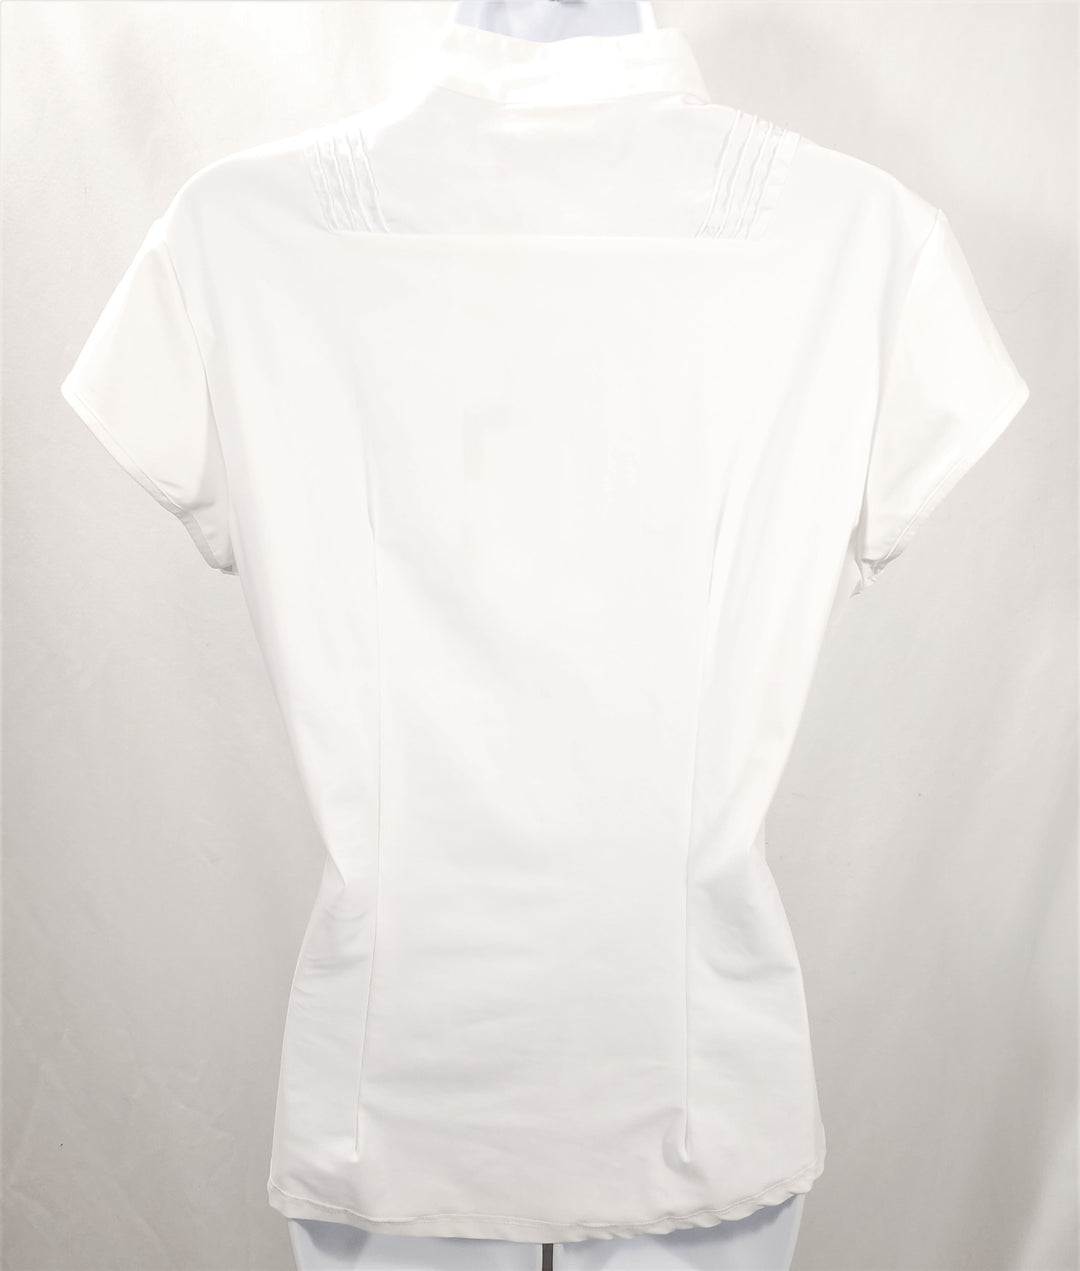 Cavalleria Toscana Ladies Short Sleeve Shirt With Bib - New!